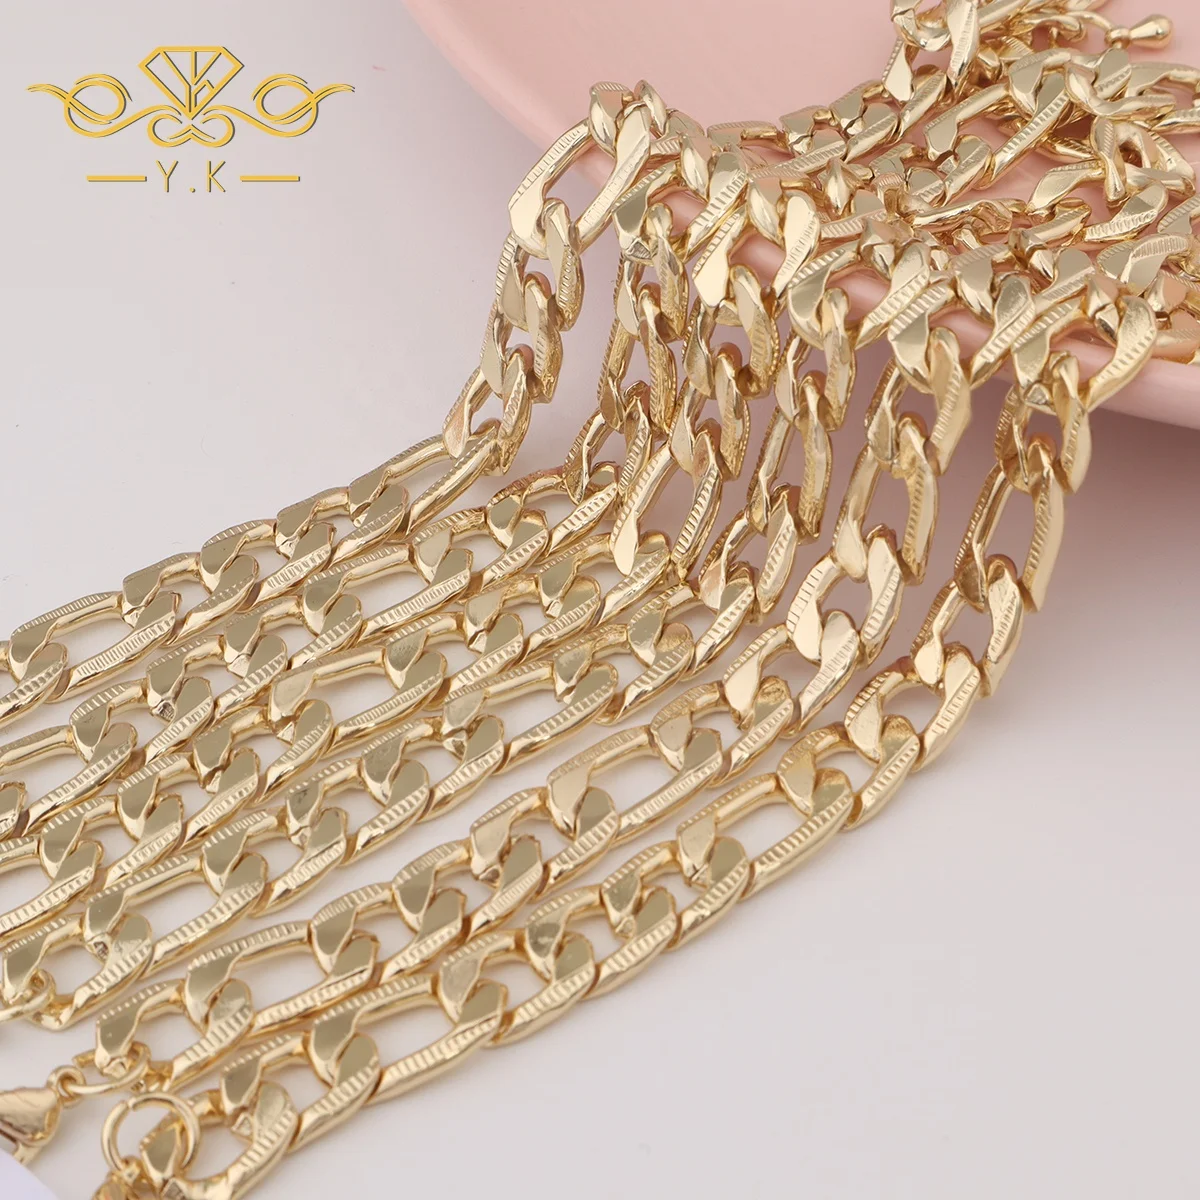 

14k Oro Laminado a Solid Gold Filled Islamic Couples Bracelets Women Men Charm Hand Bangle Ankle Jewelry Chain Link bracelet